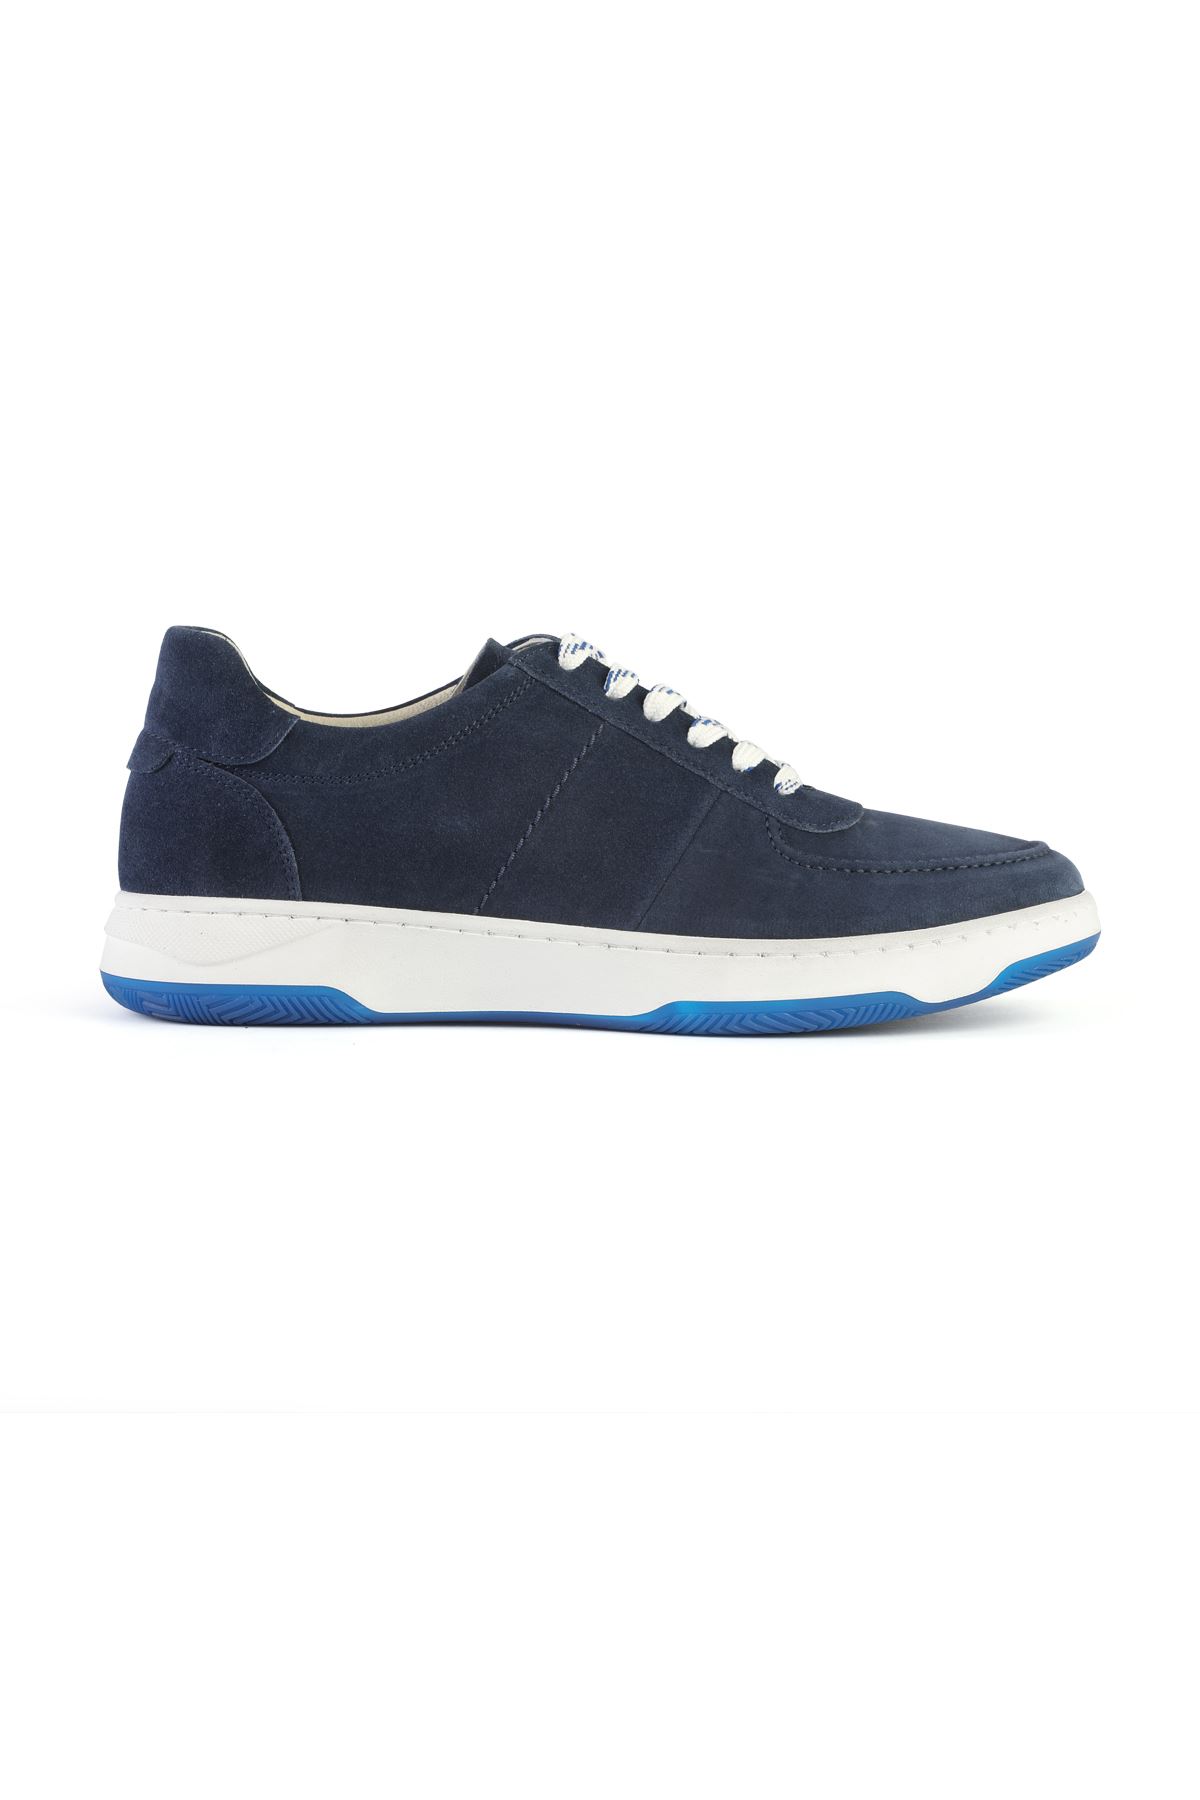 Libero 3228 Navy Blue Sports Shoes